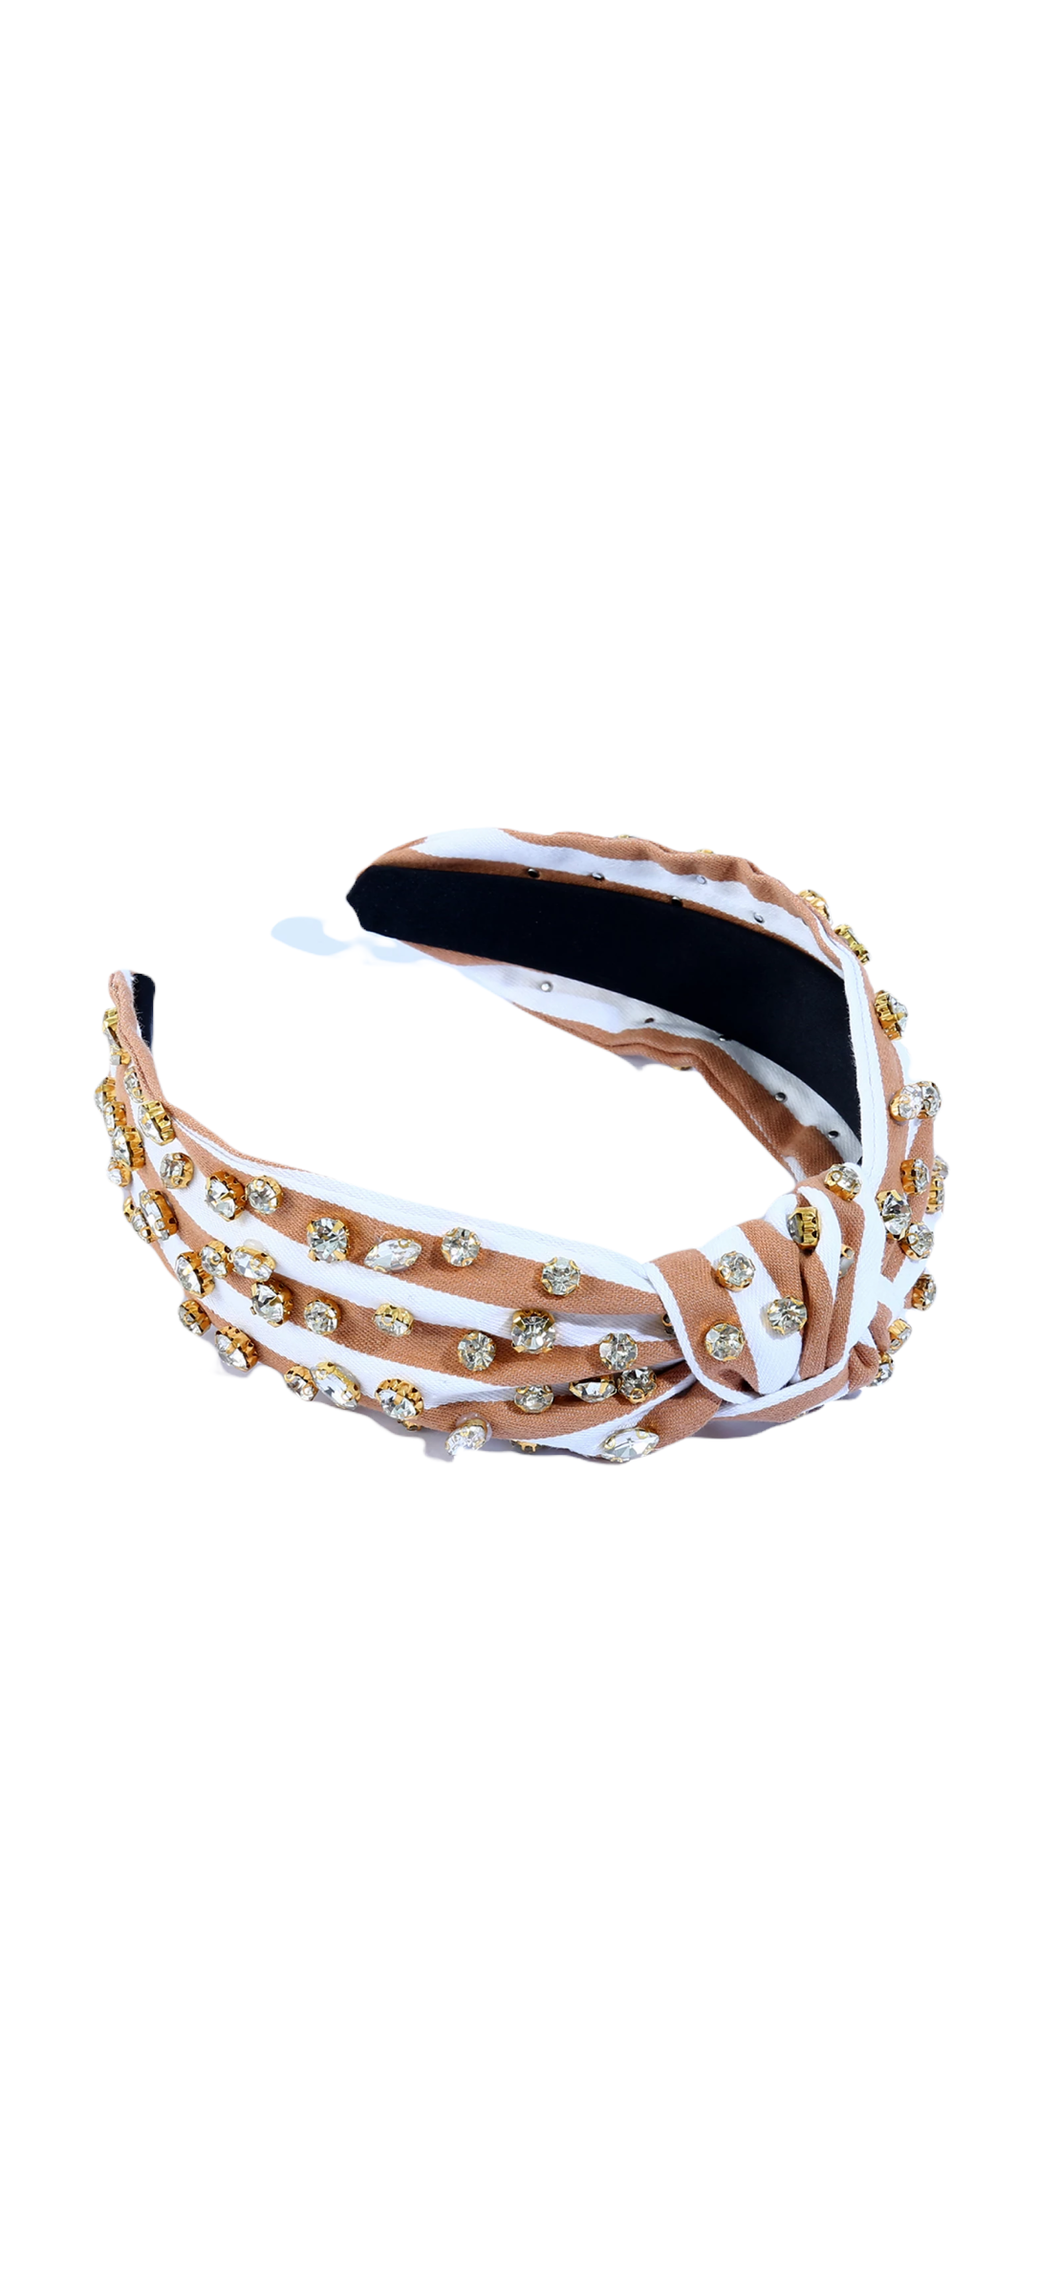 Tan & White Stripe W/ Crystals Headbands